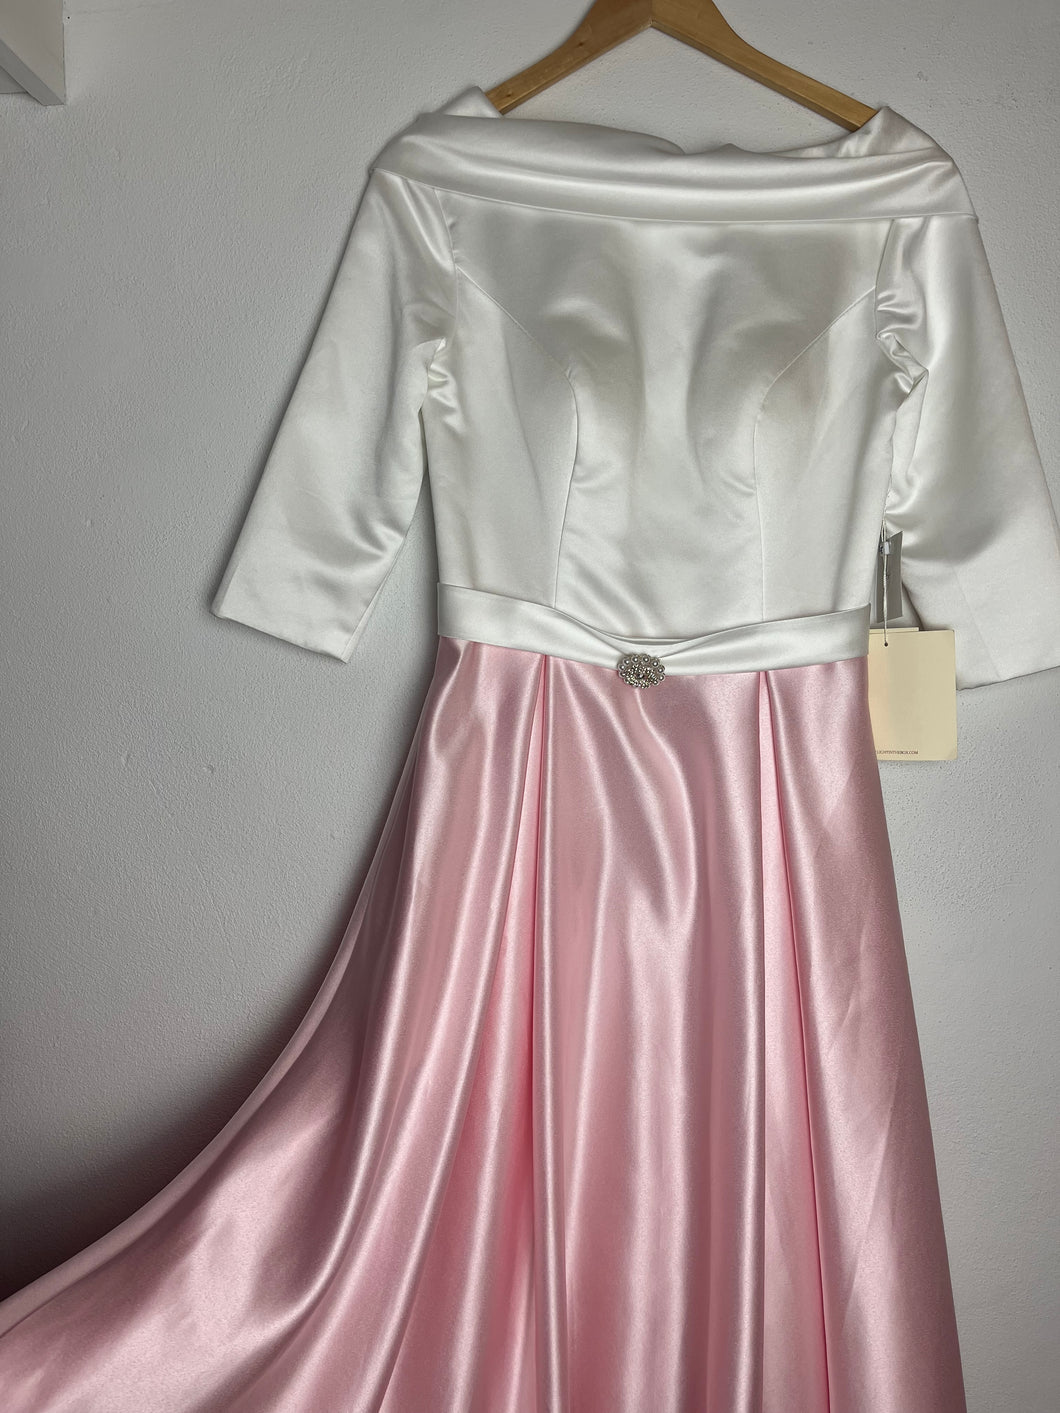 Modern 1950’s Inspired Wedding Dress - Medium